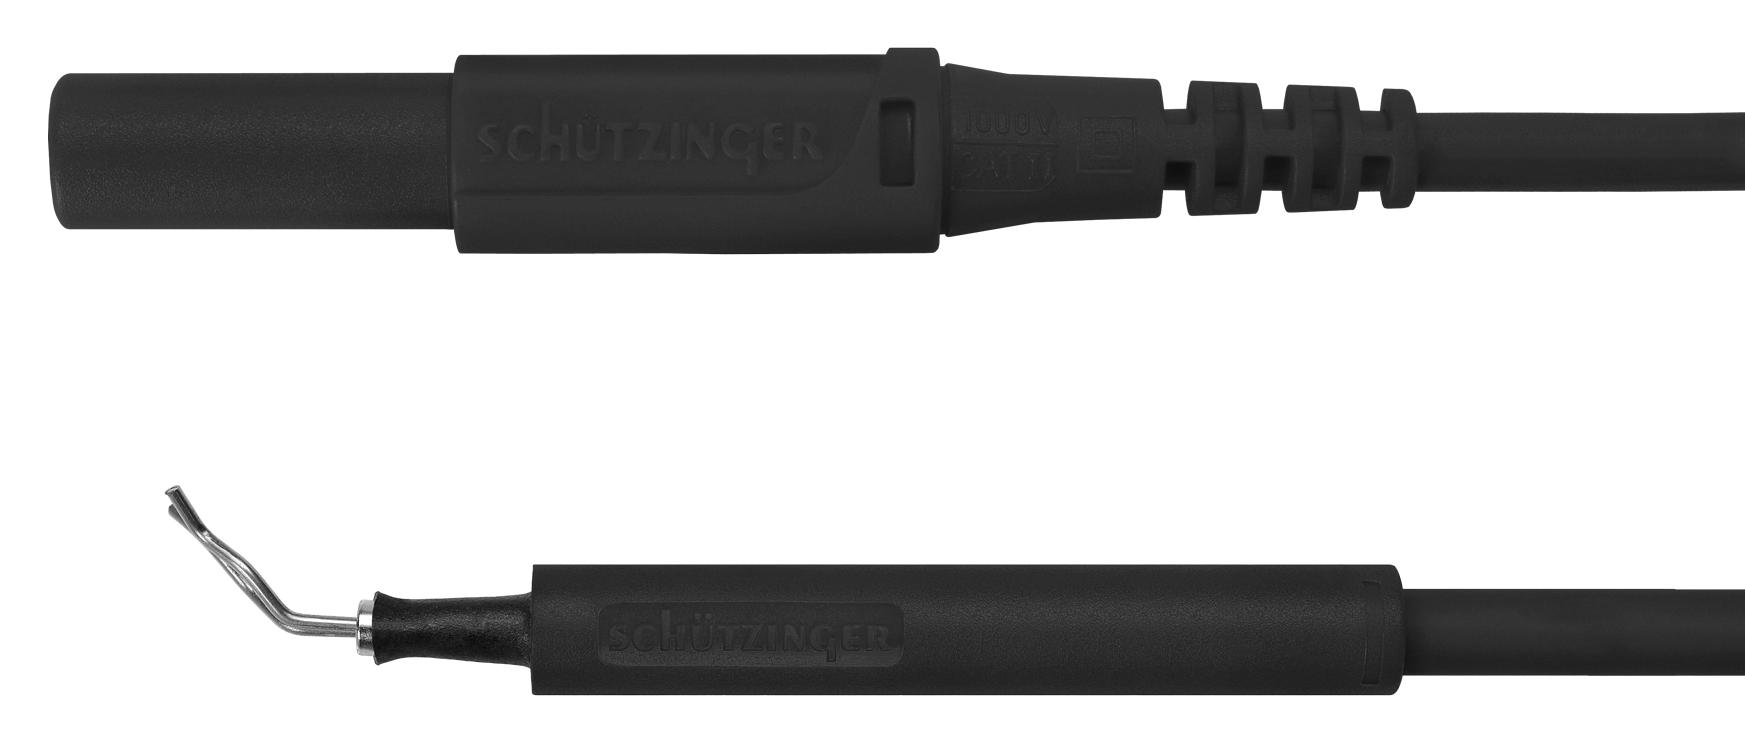 Schutzinger Al 8322 / Zpk / 1 / 50 / Sw Test Lead, 4mm Jack-Test Clip, 500mm